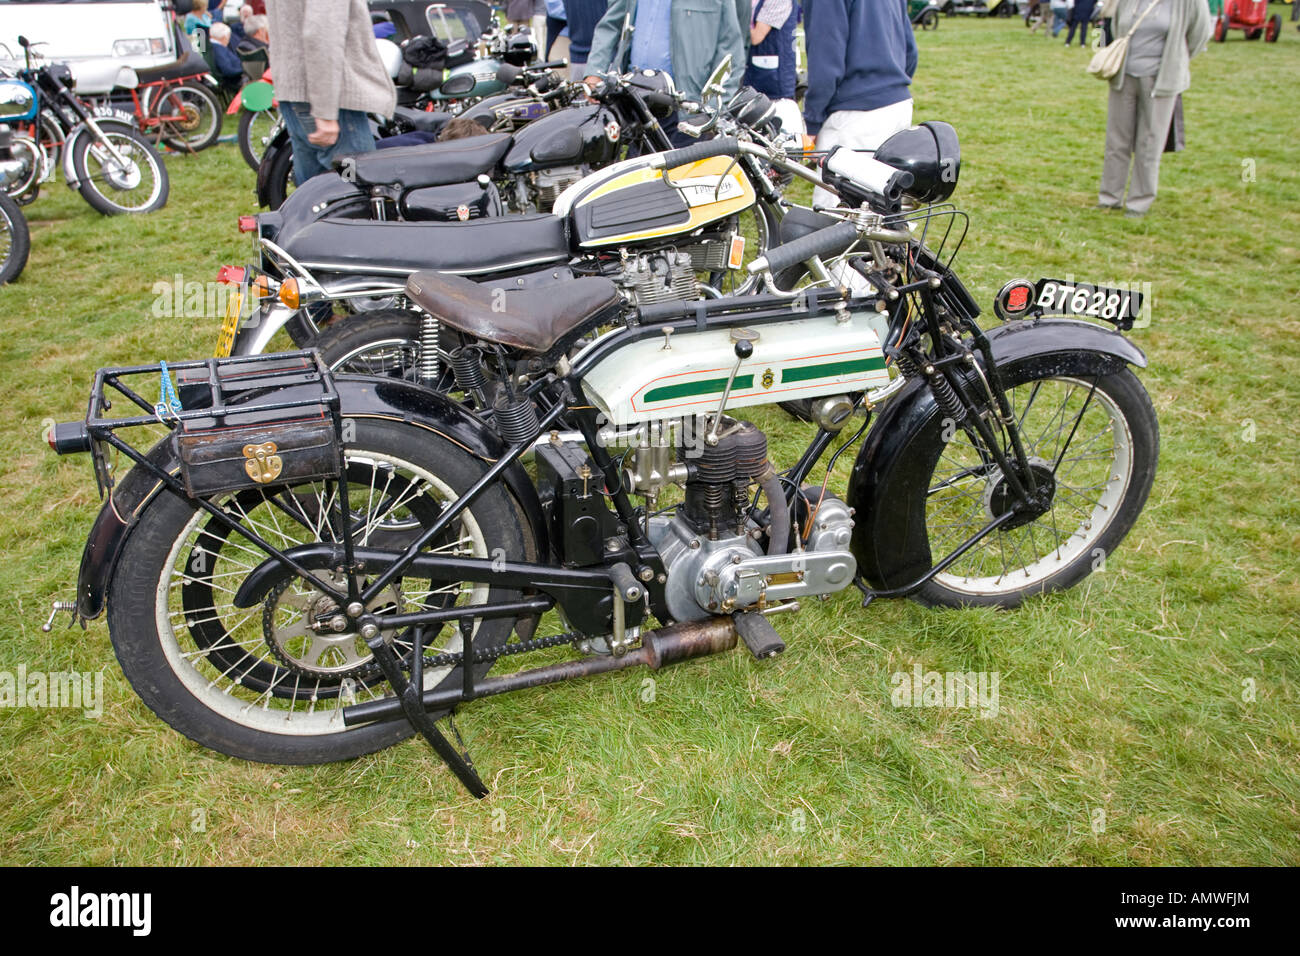 40++ Stunning Vintage triumph motorcycles ideas